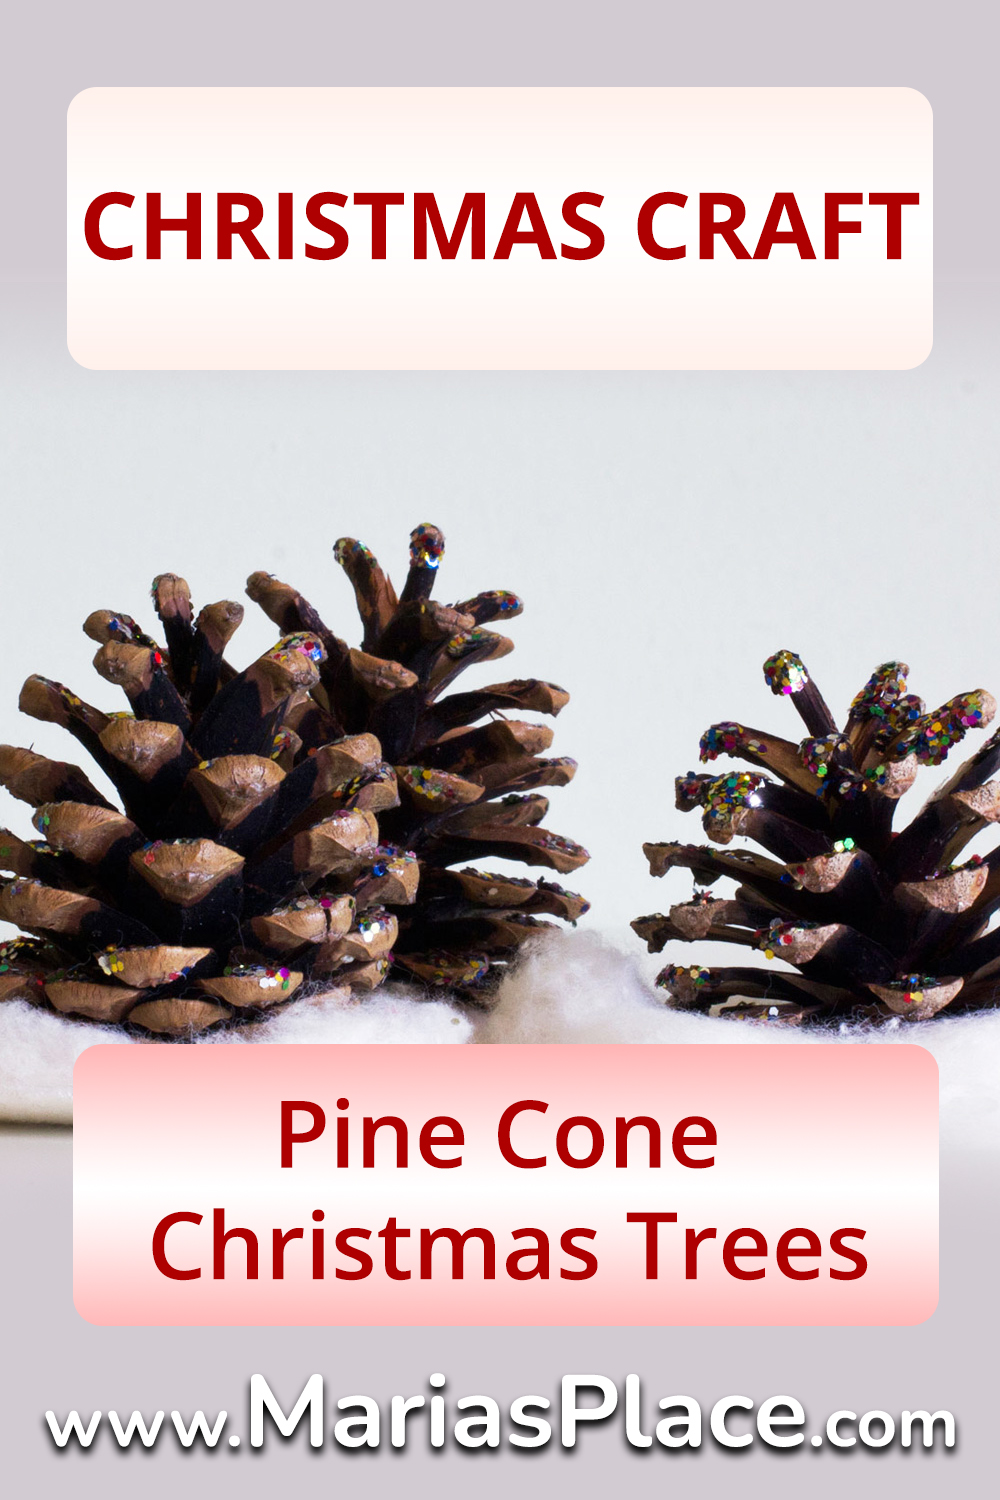 Pine Cone Christmas